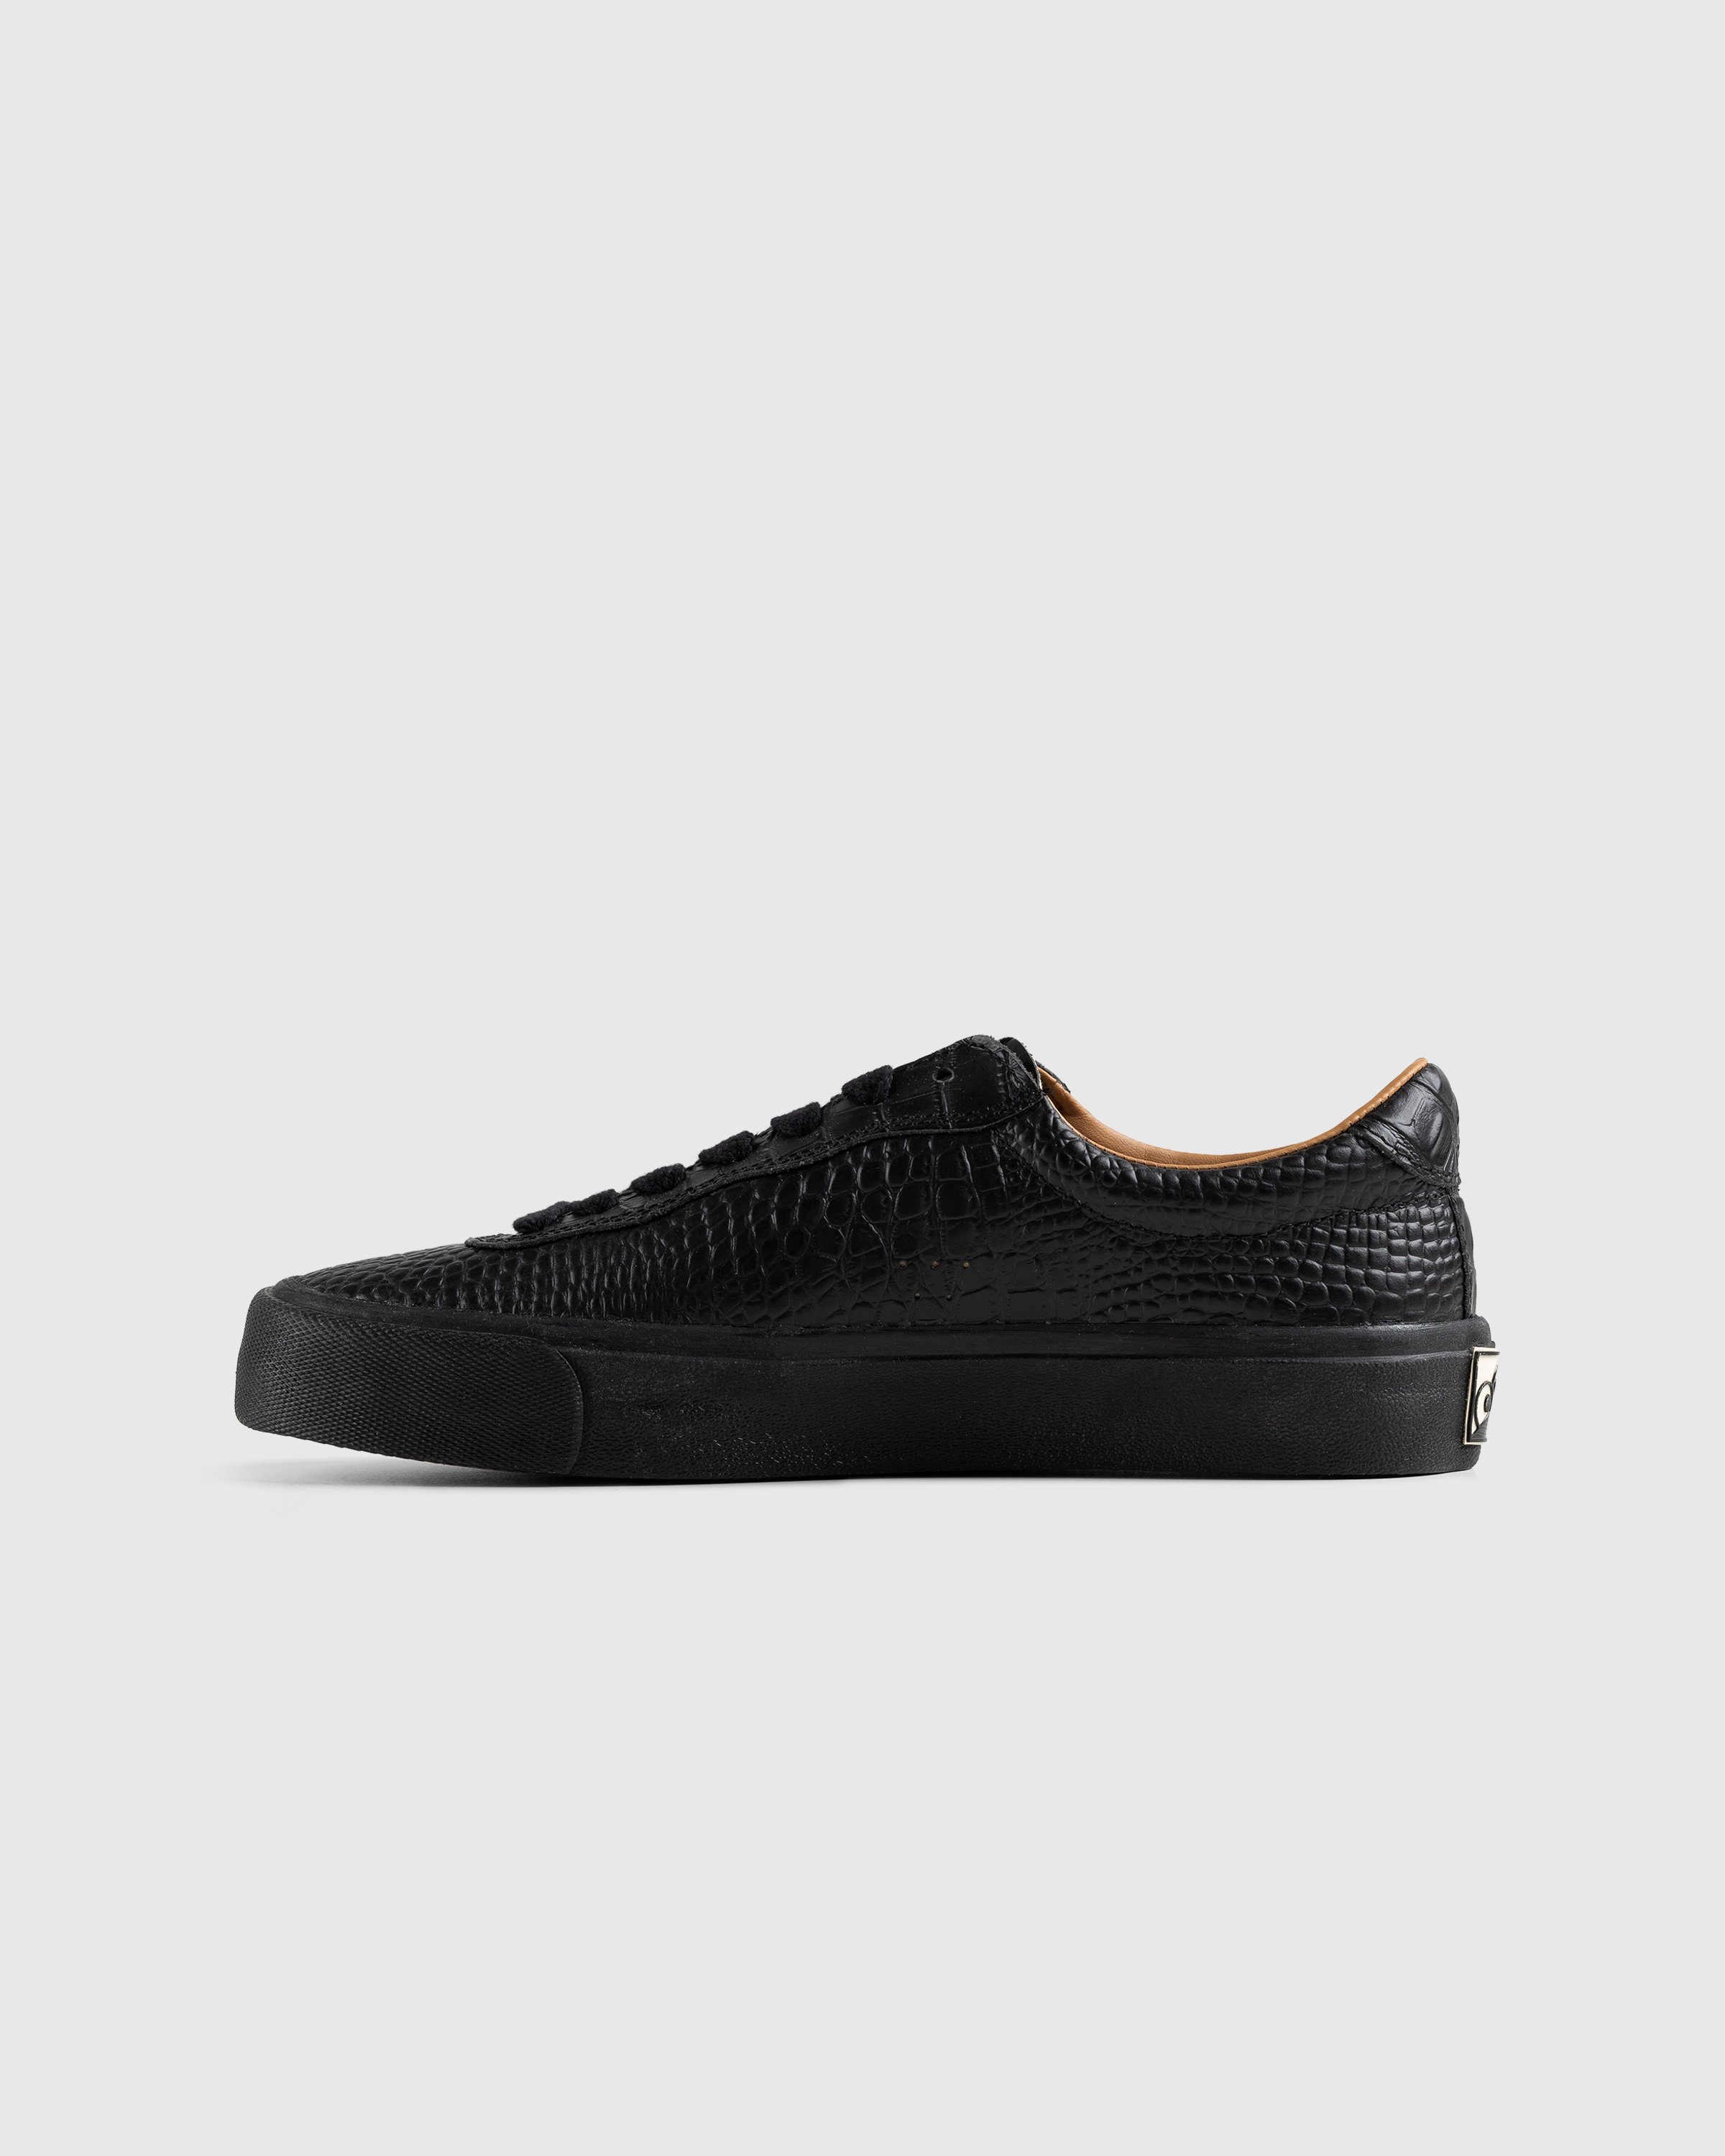 Last Resort AB - VM001-Croc LO Black/Black - Footwear - Black - Image 2